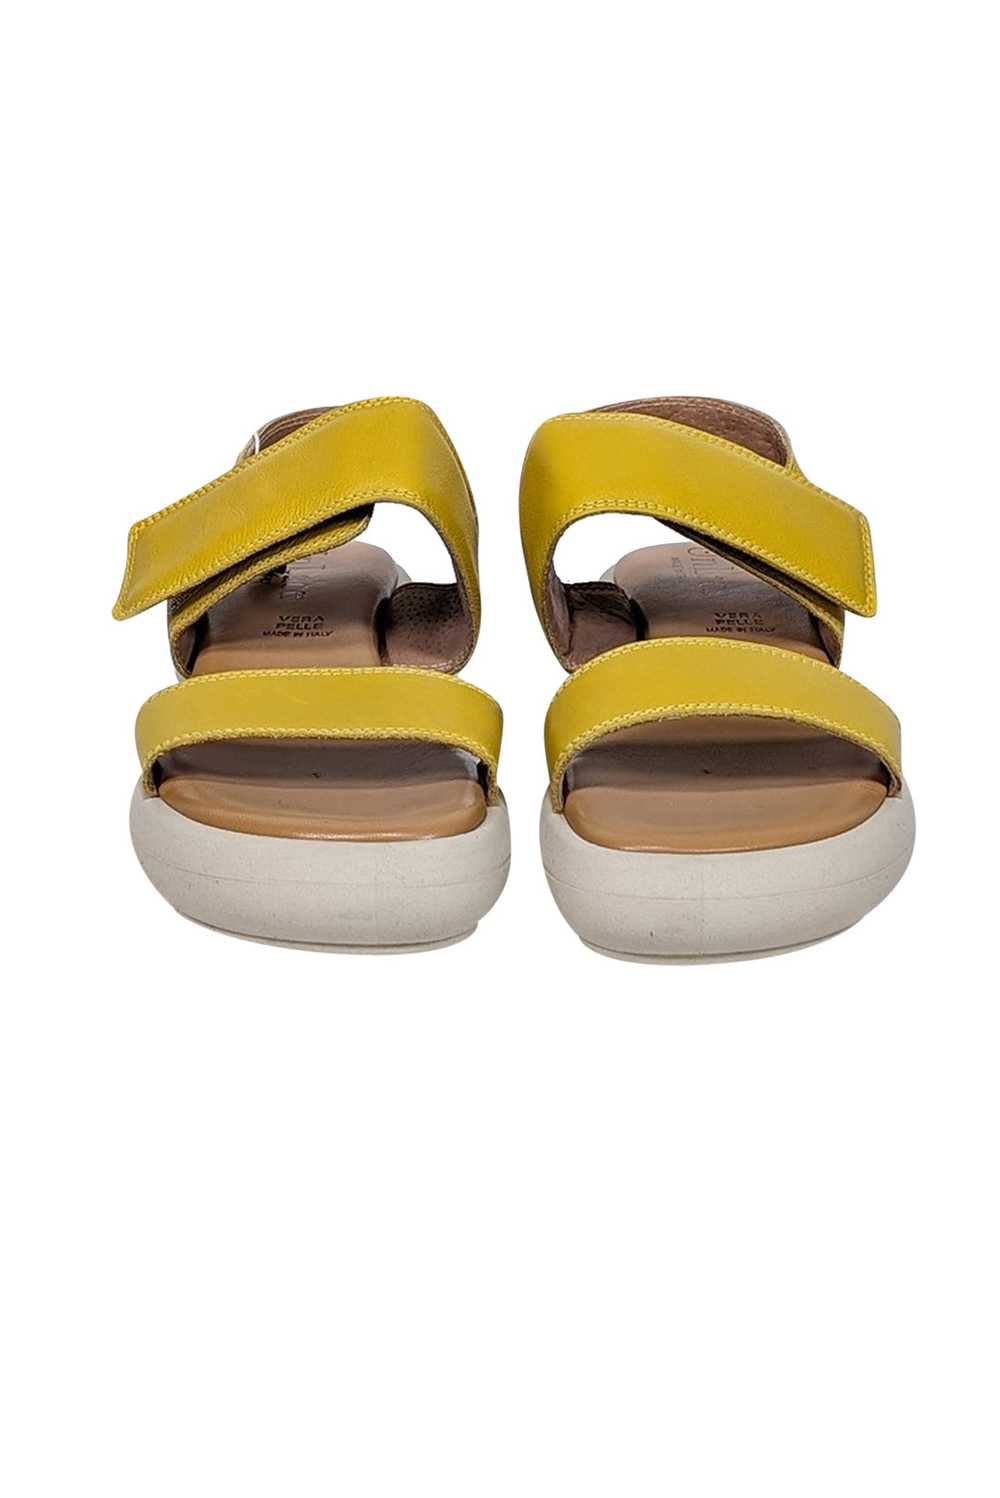 UnLace - Yellow & Cream Strappy Sandals Sz 10 - image 2